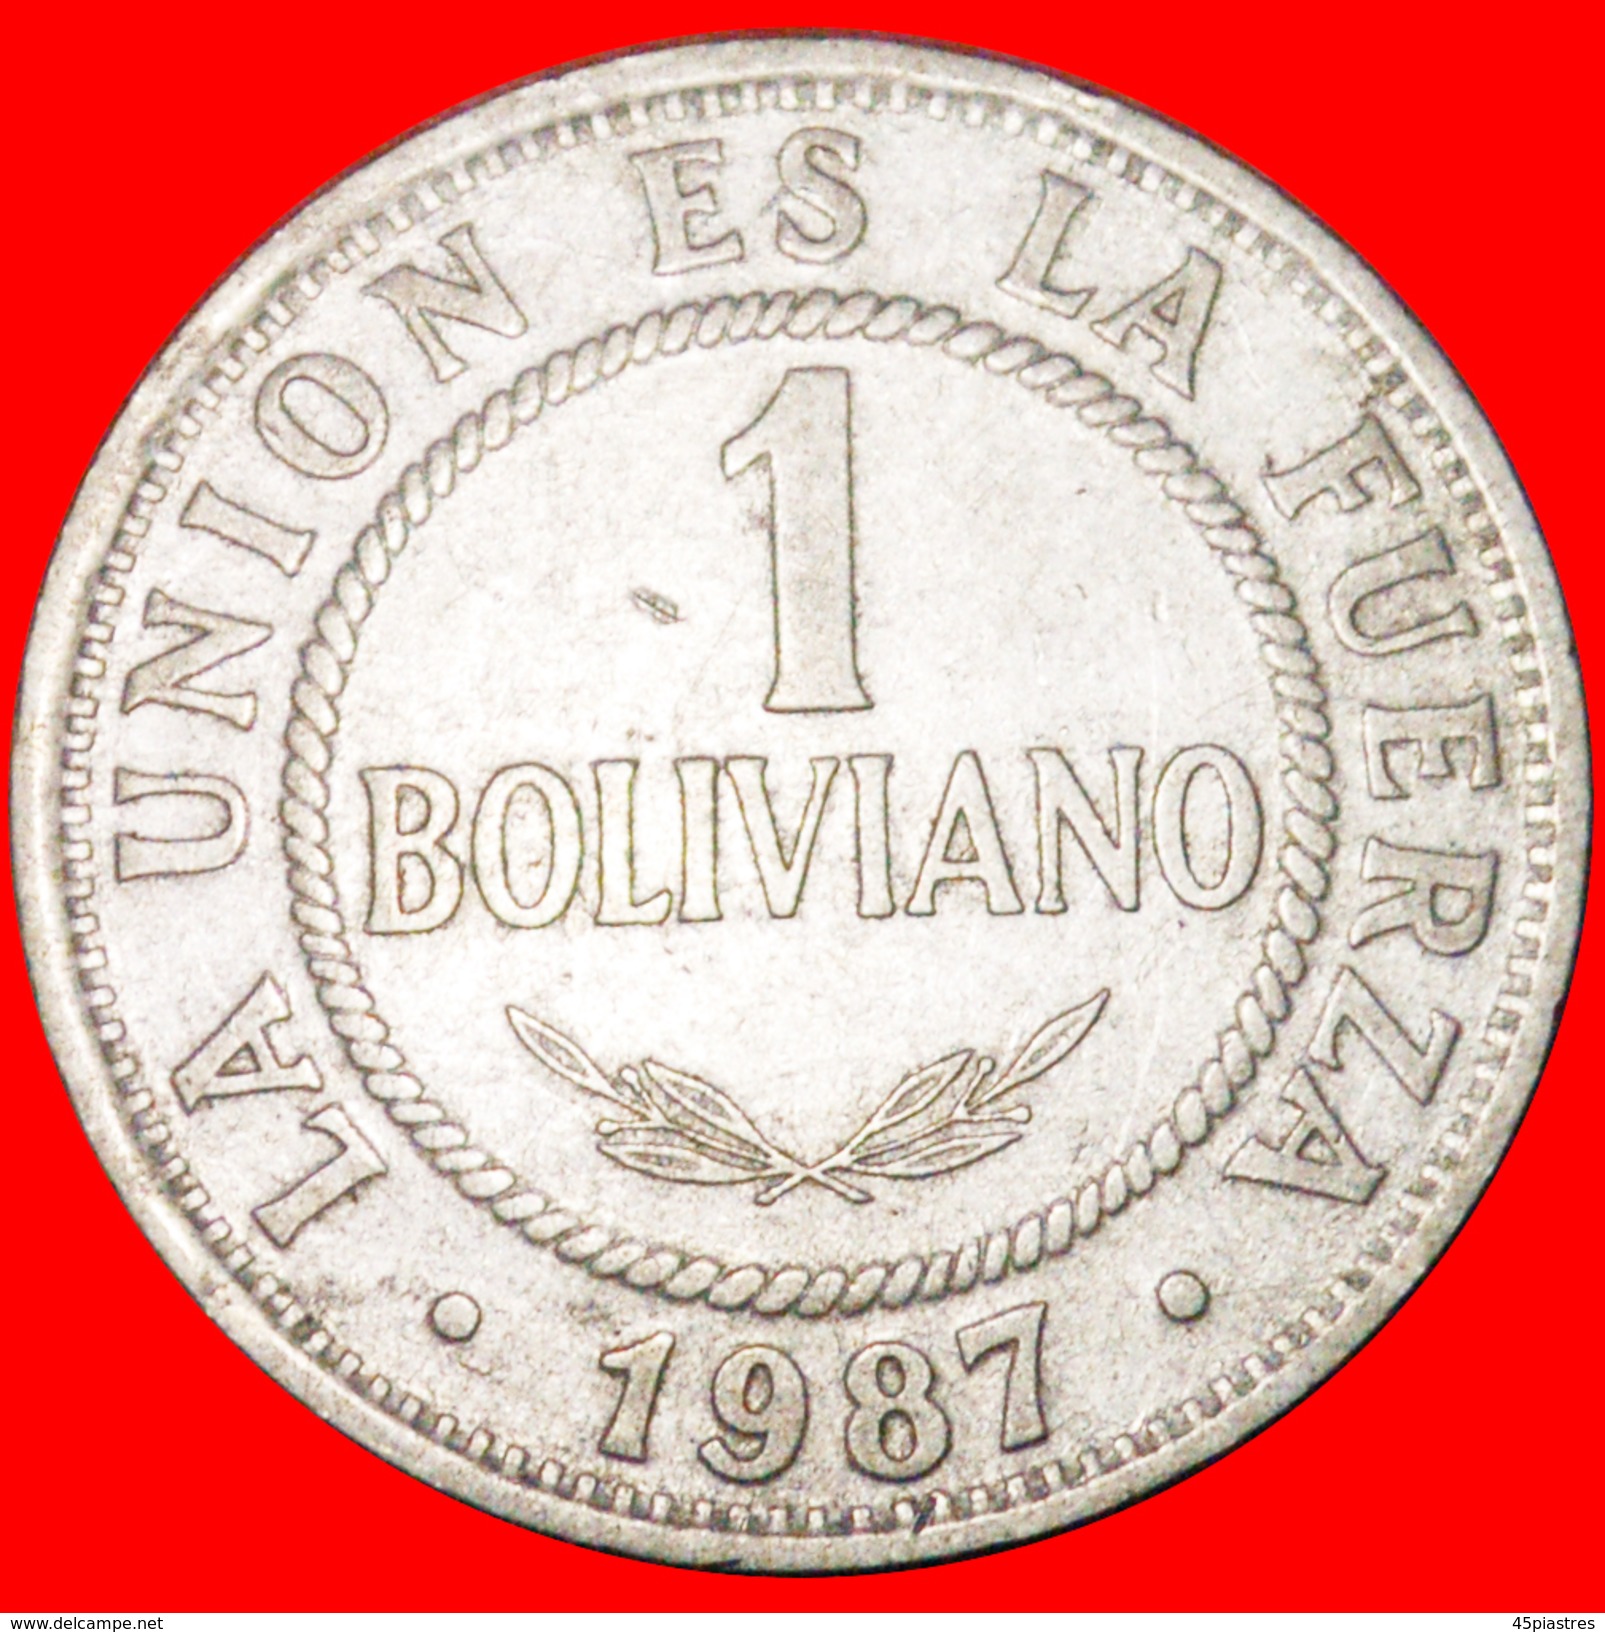 § SUN: BOLIVIA &#x2605; 1 BOLIVIANO 1987! LOW START&#x2605; NO RESERVE! - Bolivia